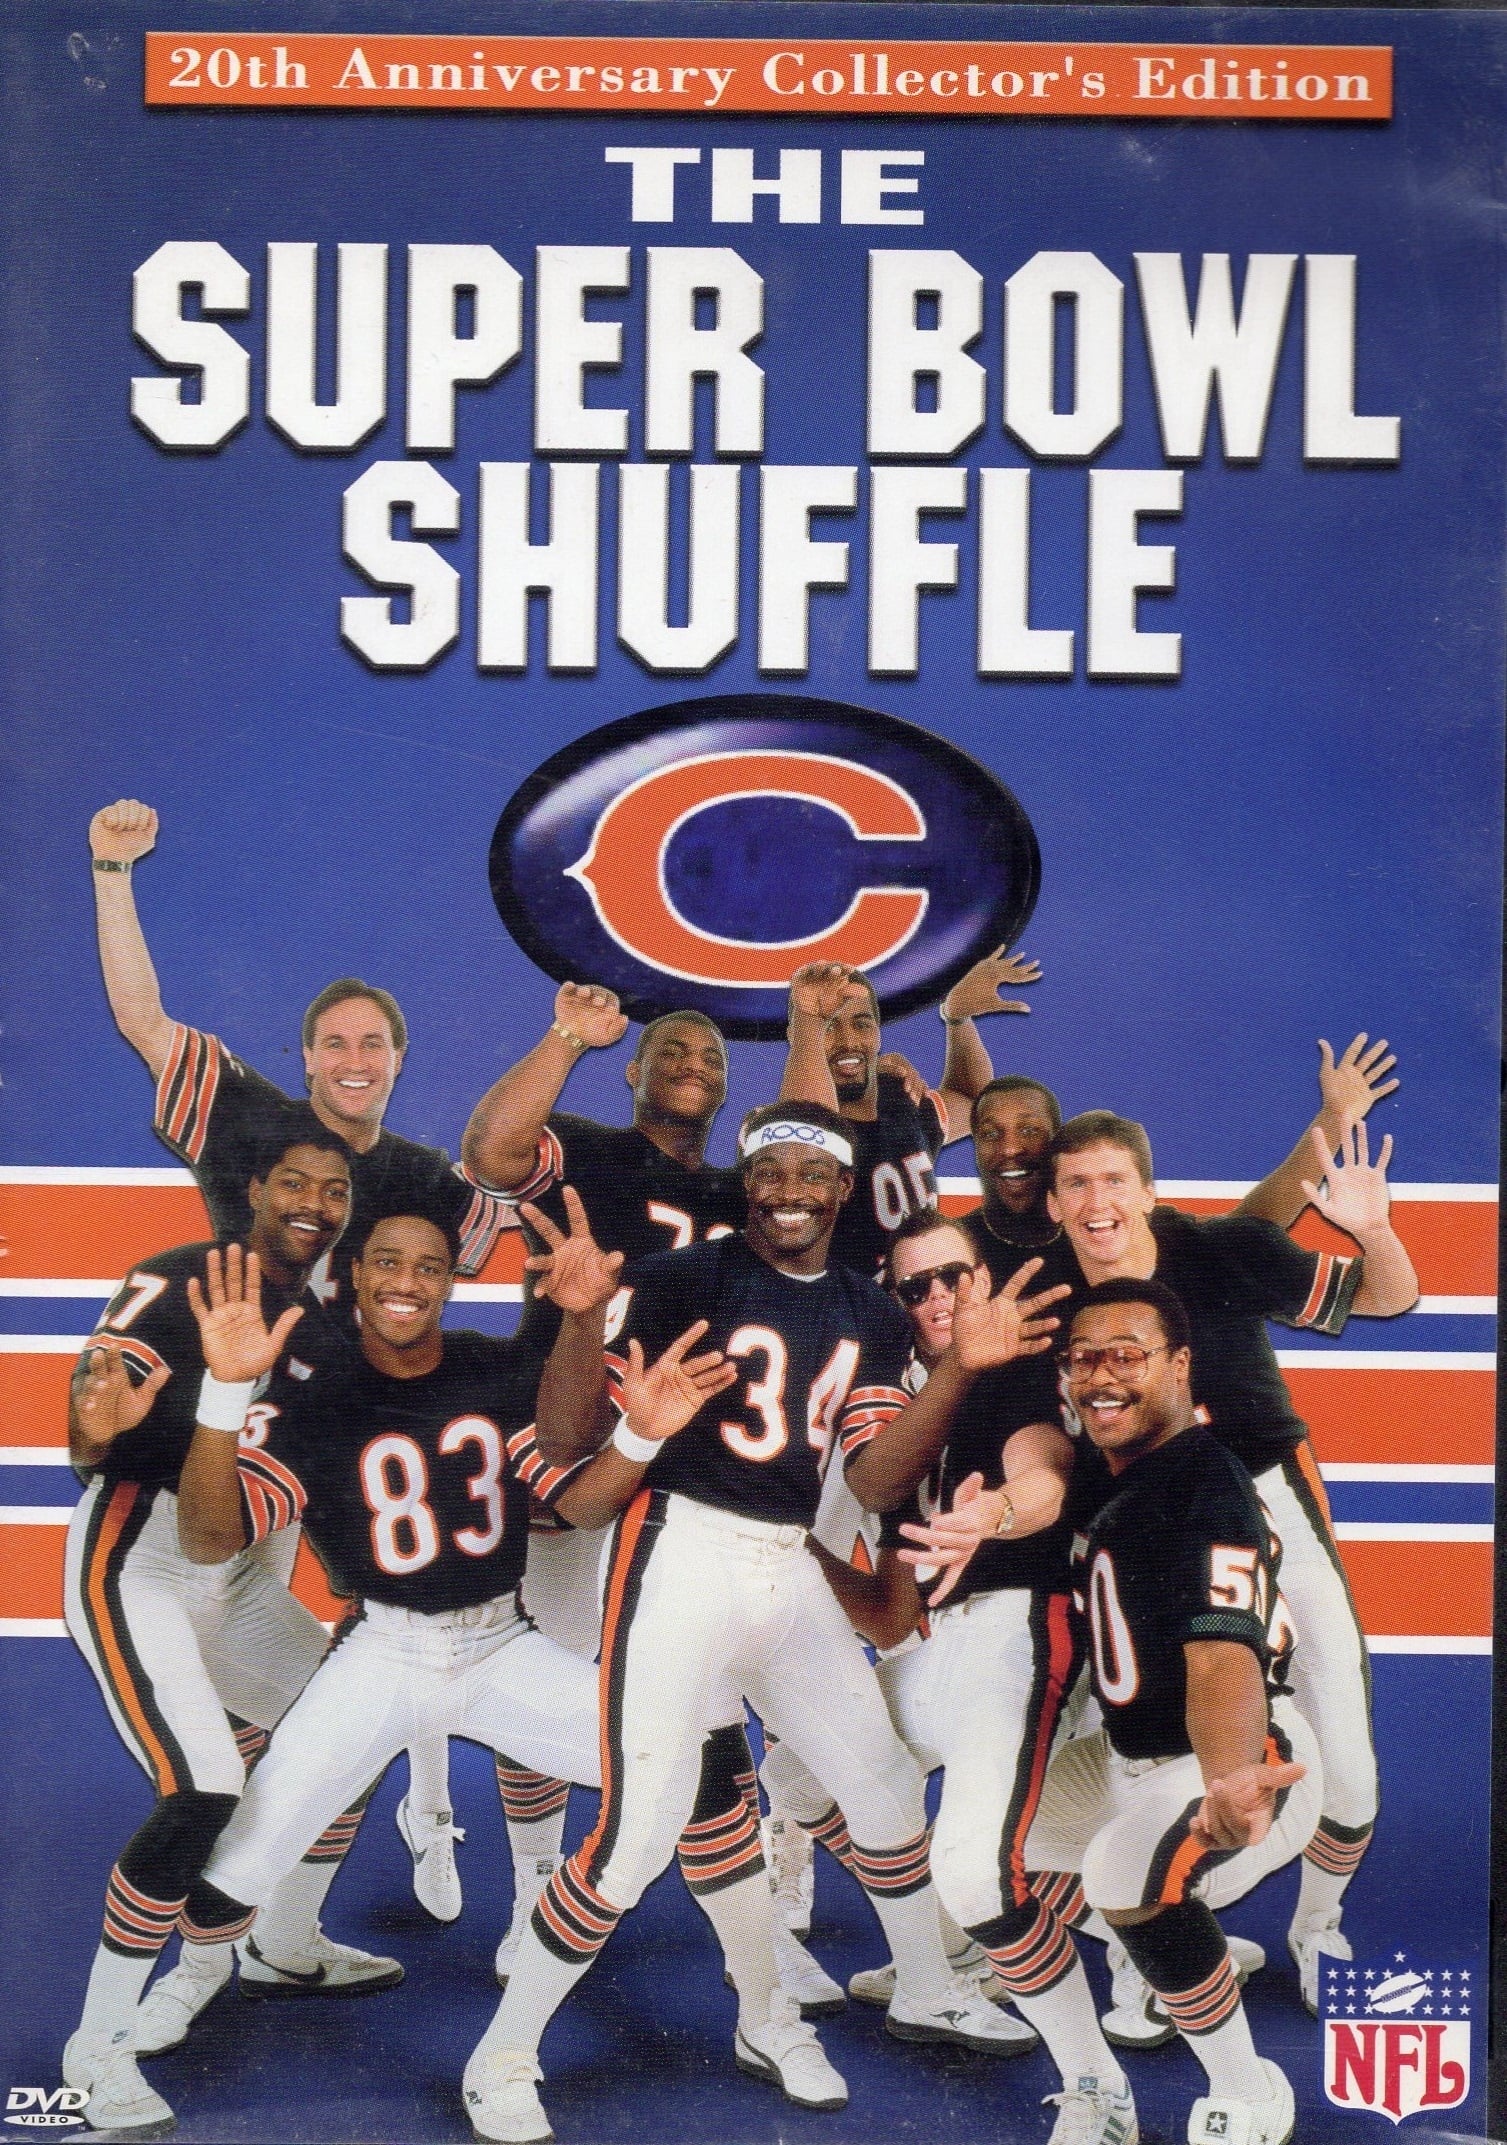 Chicago Bears: The Super Bowl Shuffle